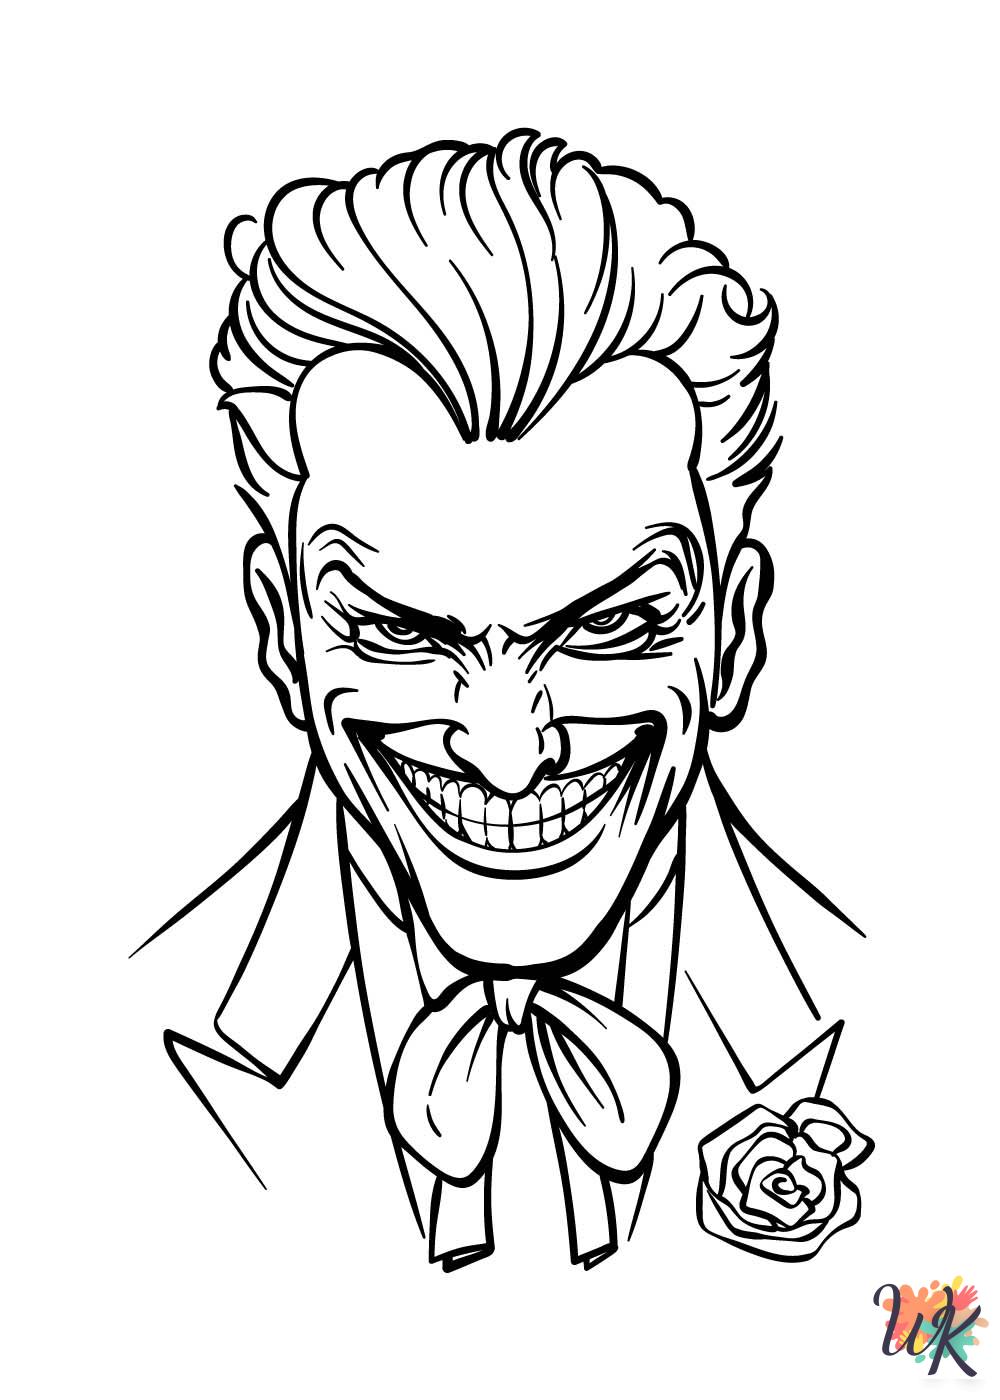 Joker coloring pages pdf